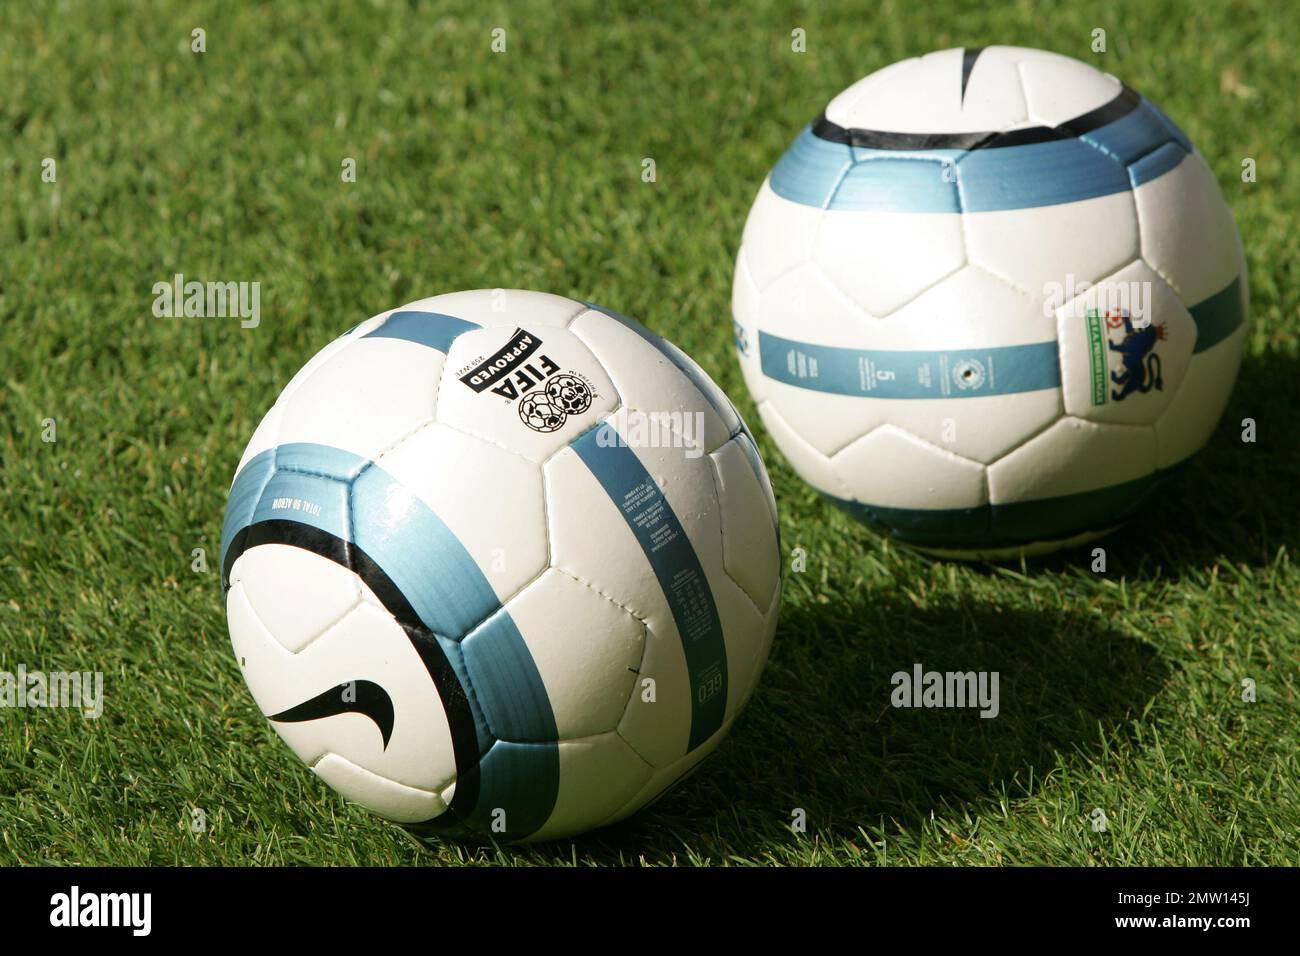 2004 season premier league Fifa Nike ball. Stock Photo